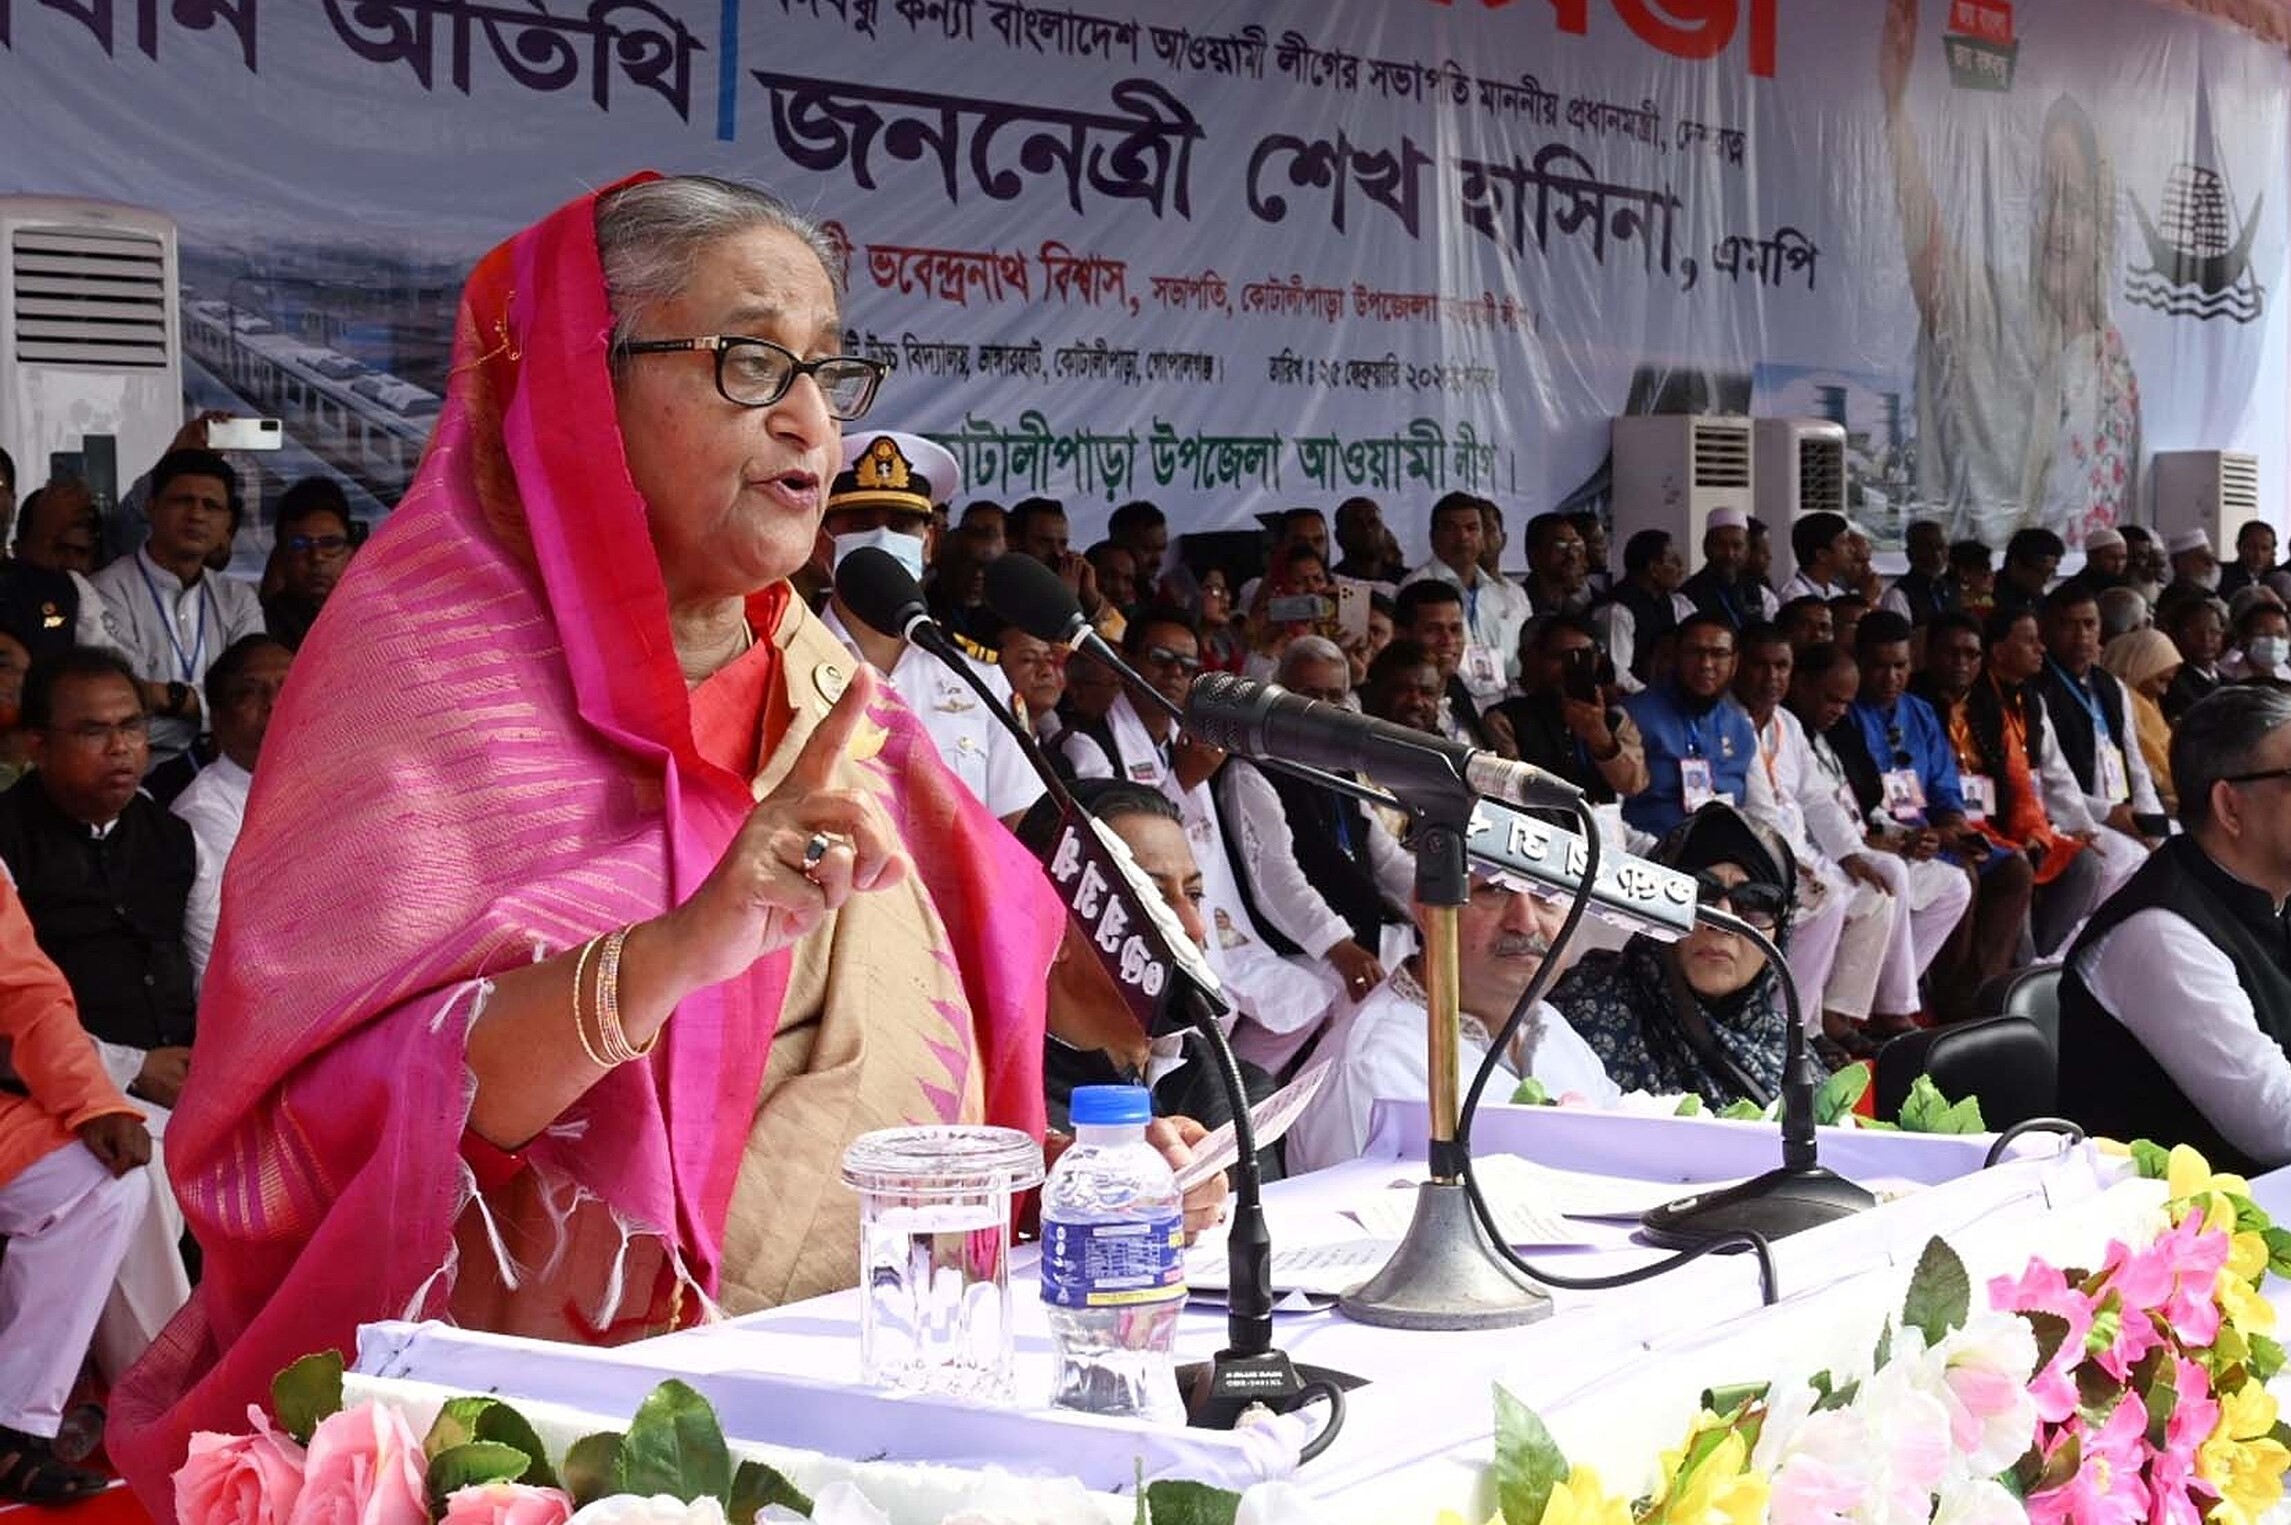 Sheikh Hasina Image DelwarHossain Wikimedia Commons